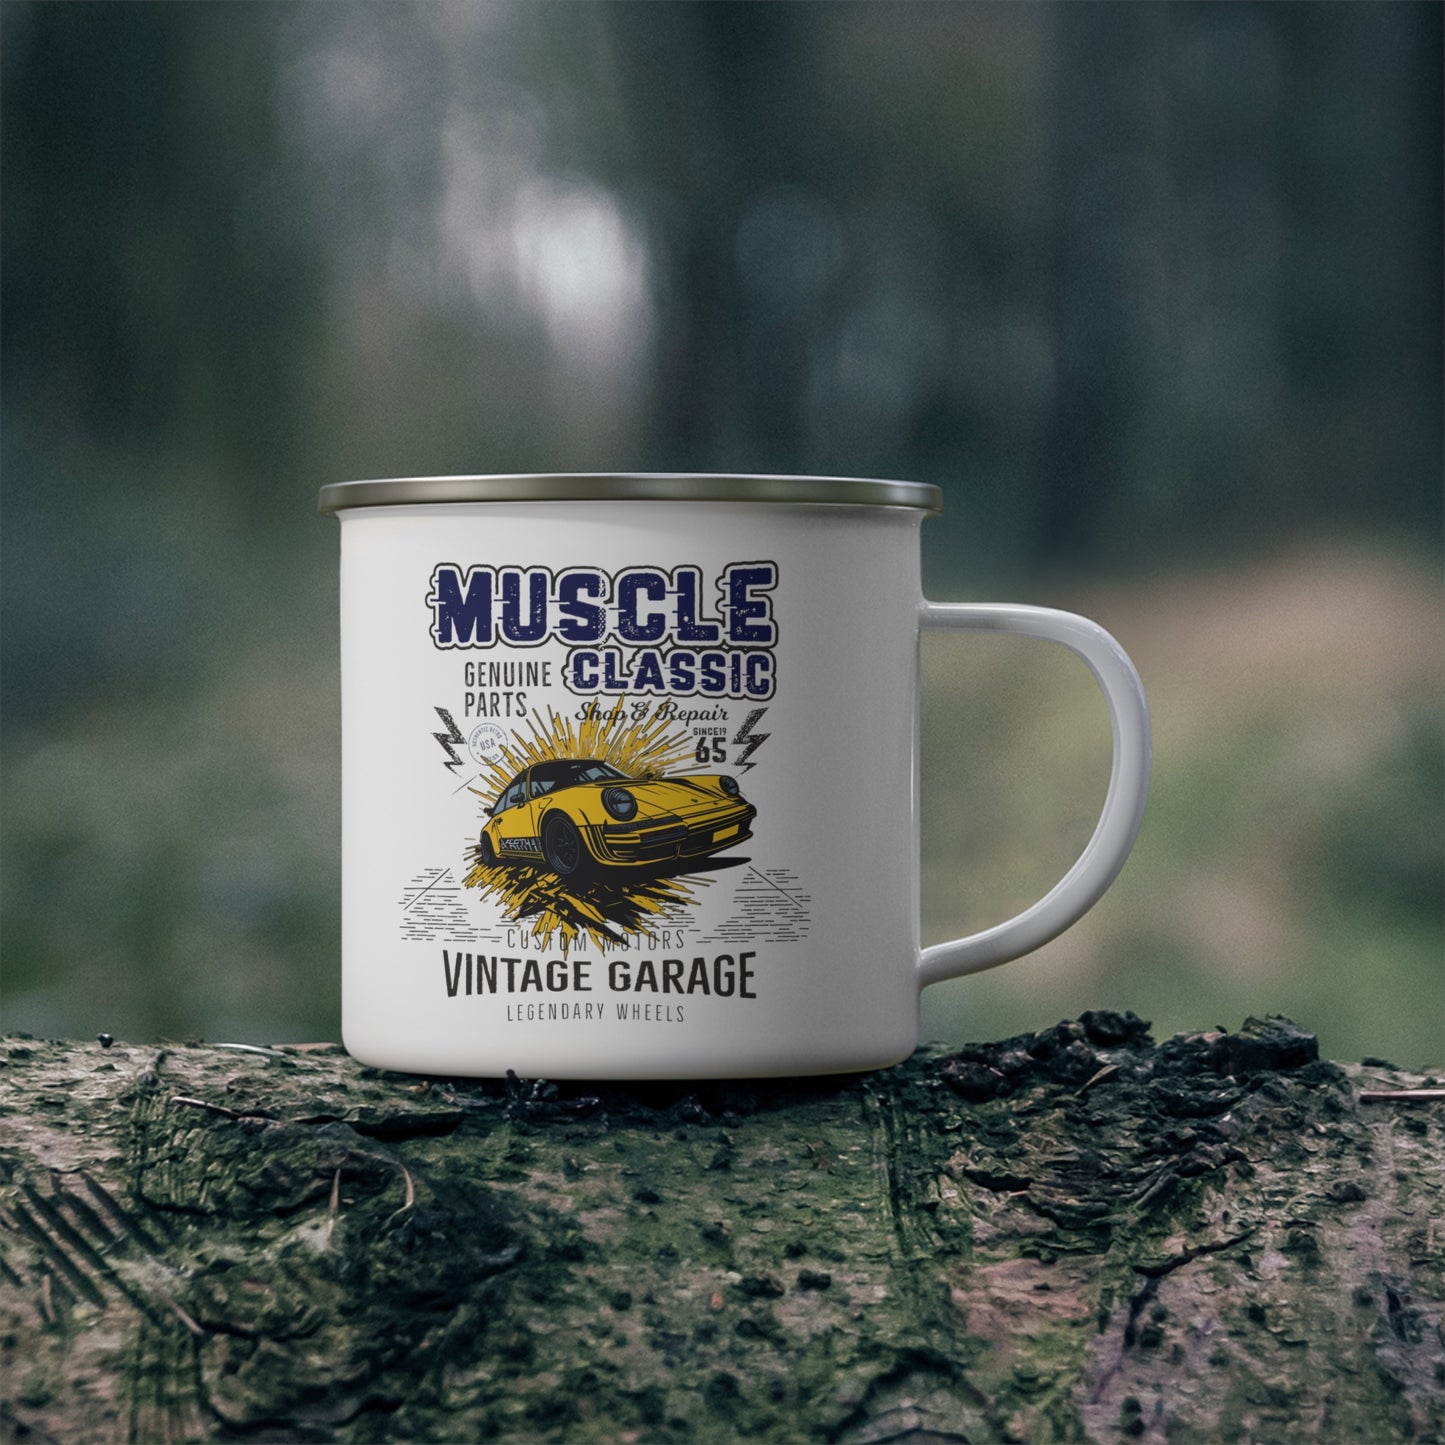 MUSCLE Enamel Camping Mug